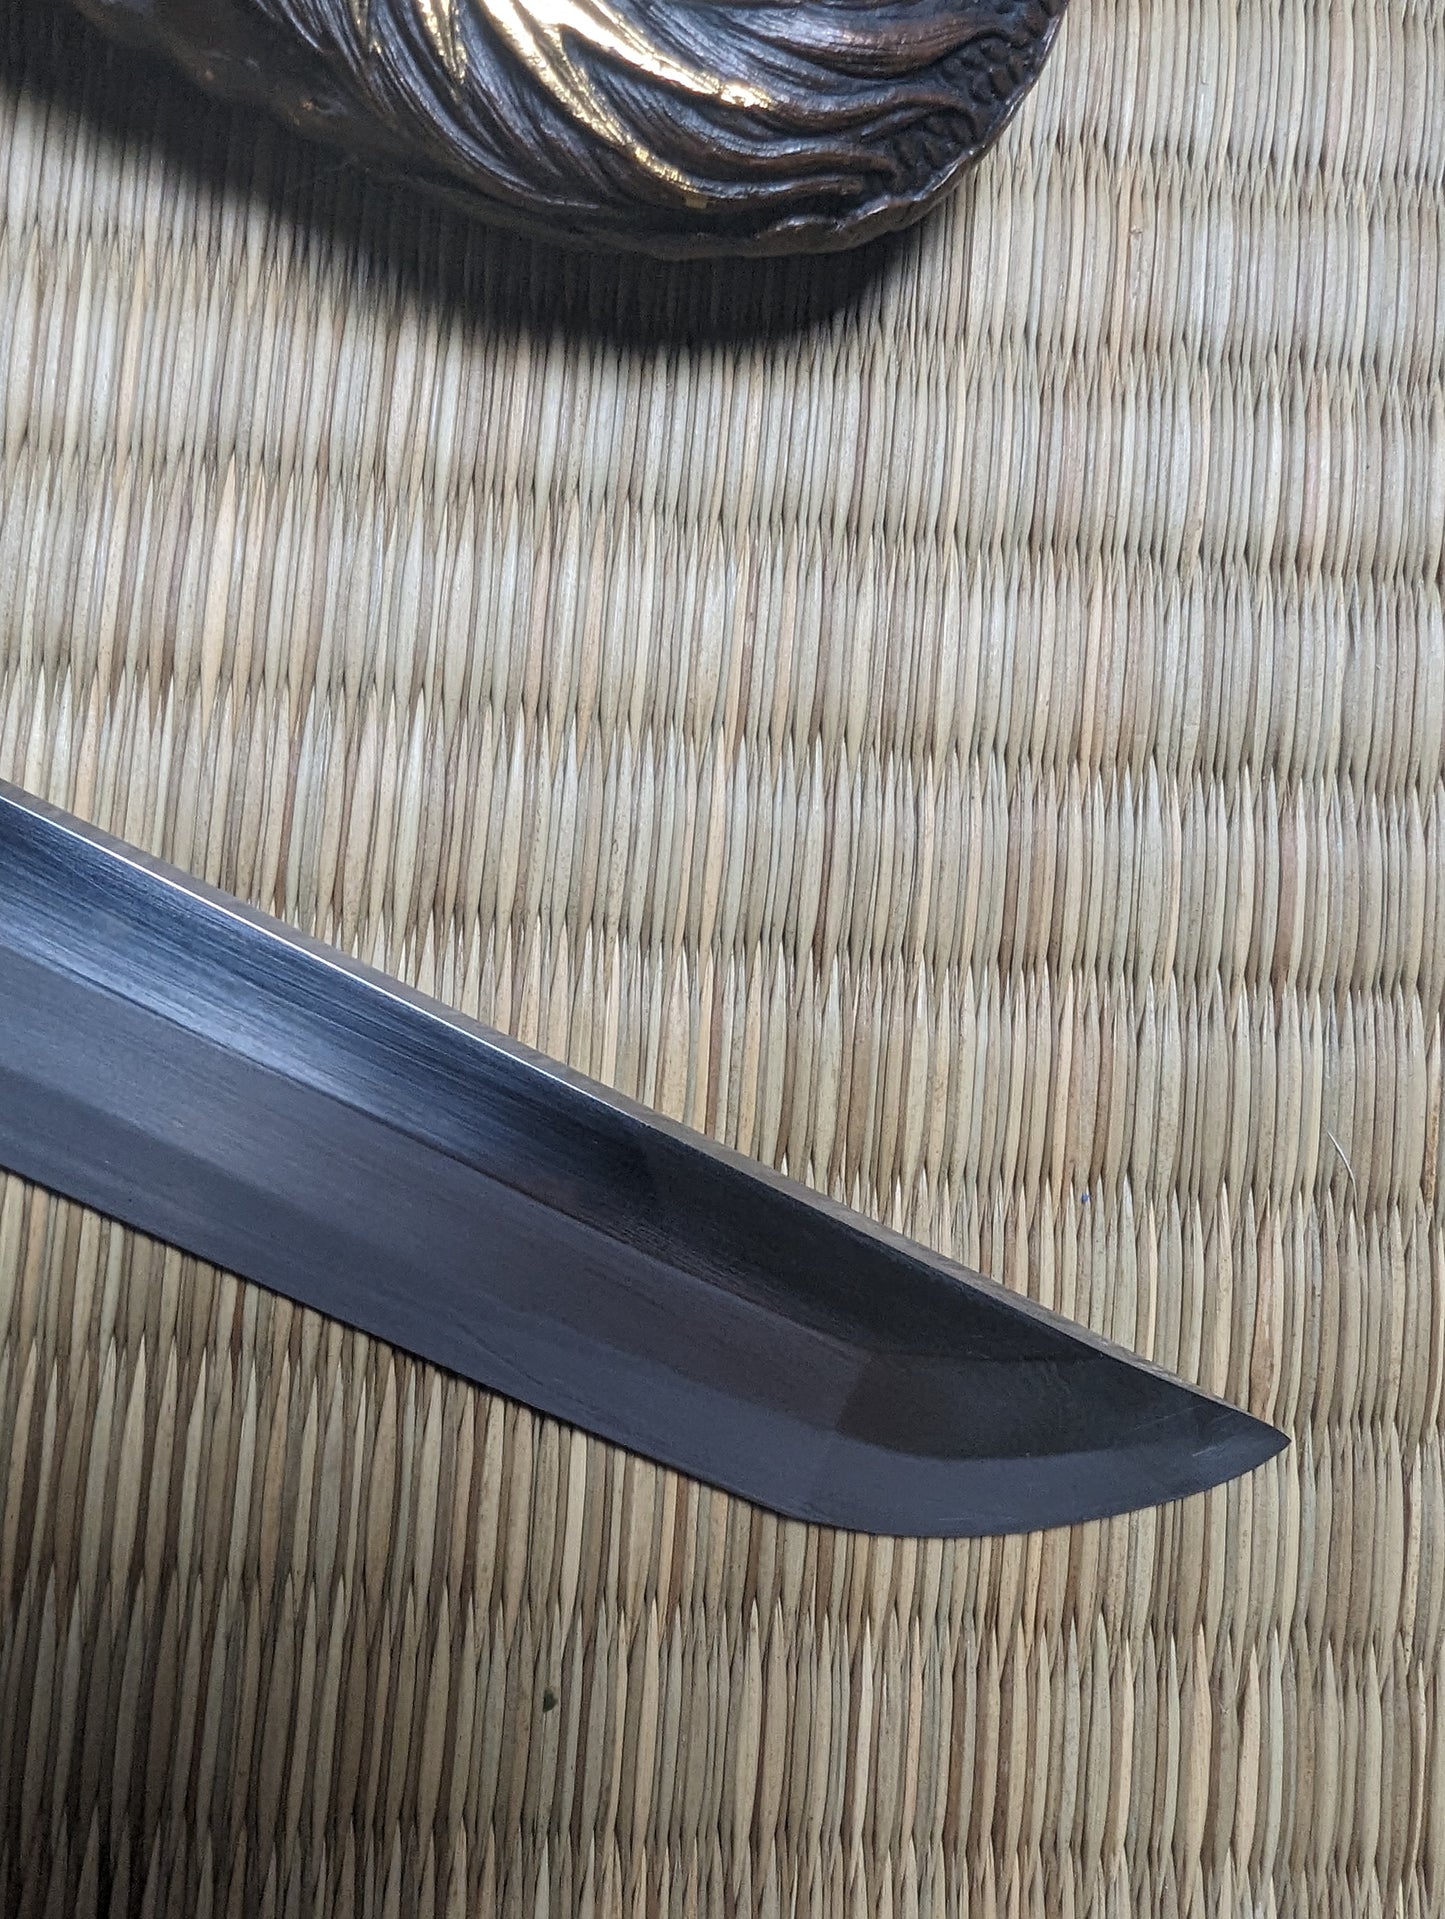 Phoenix Arms Dragon Head Tachi -  - Sanmai folded steel, clay tempered, 3-shade polish